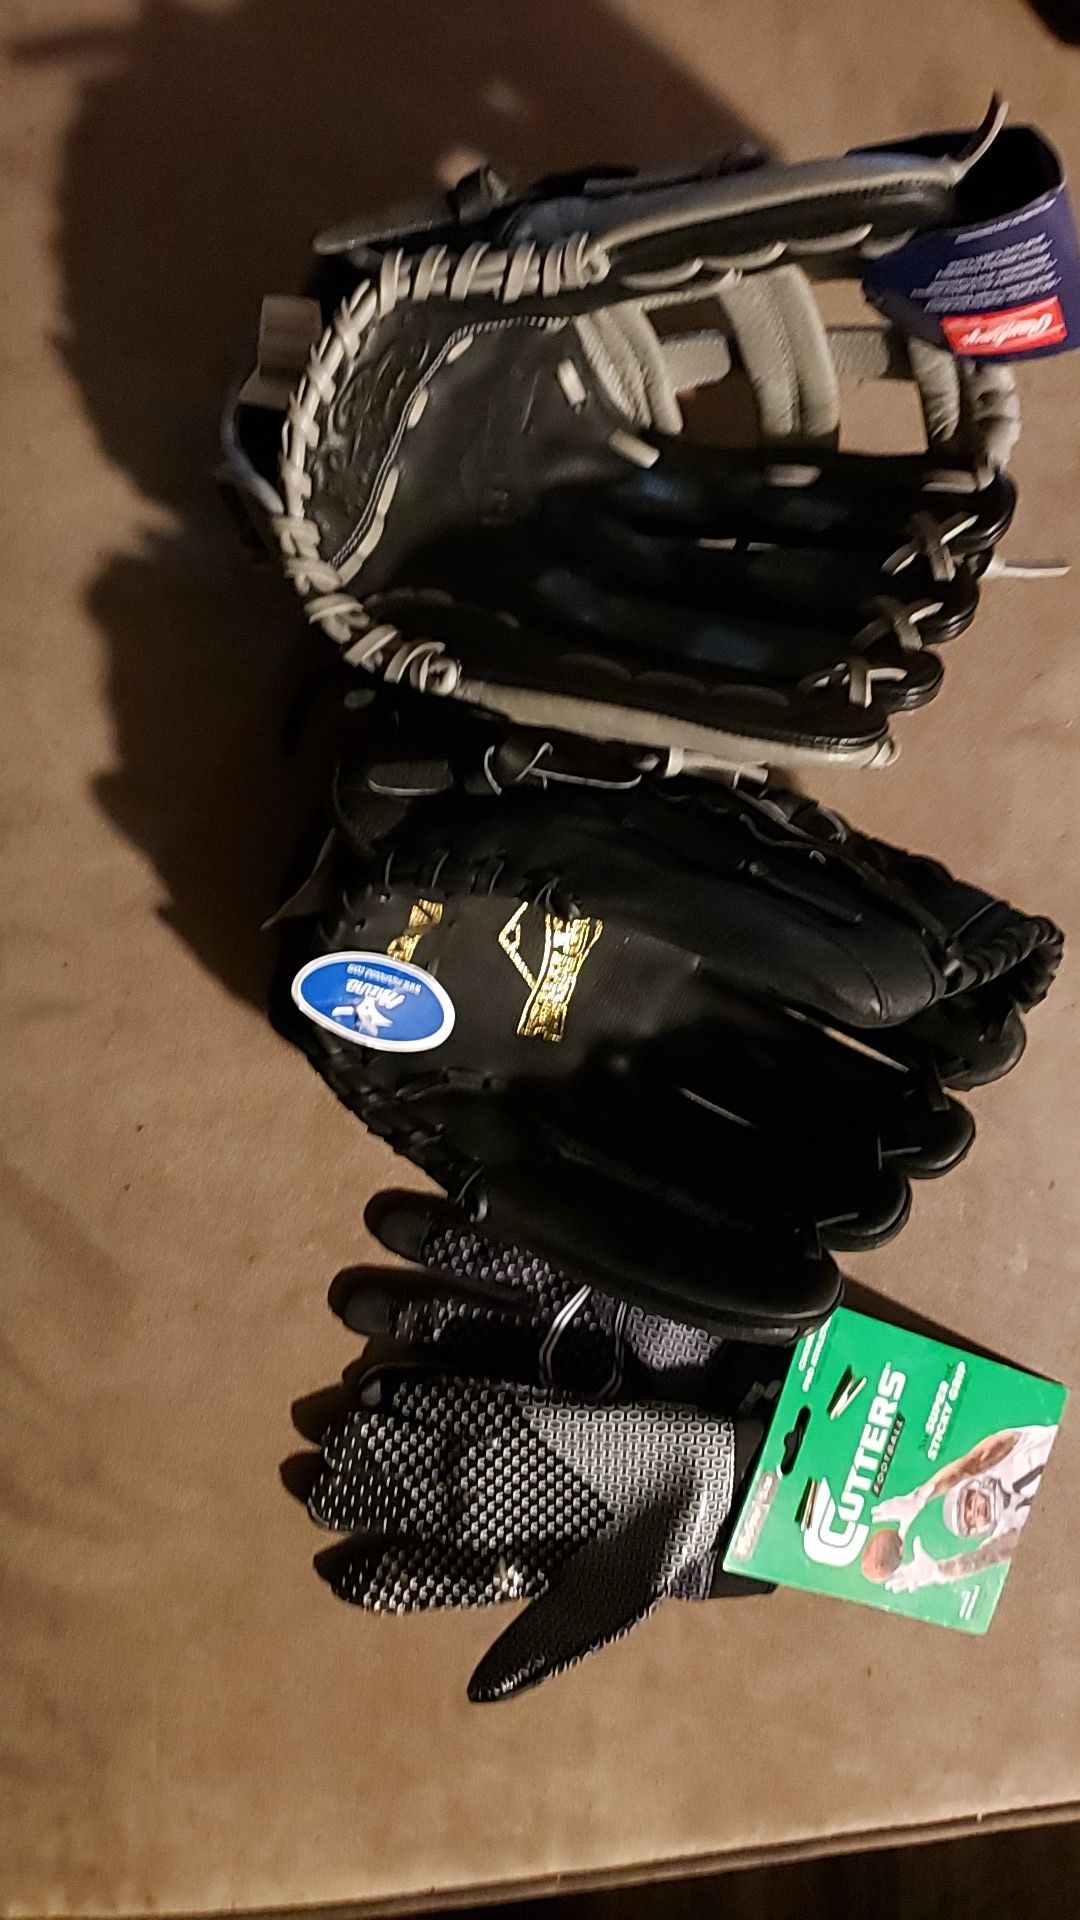 Baseball and football gloves